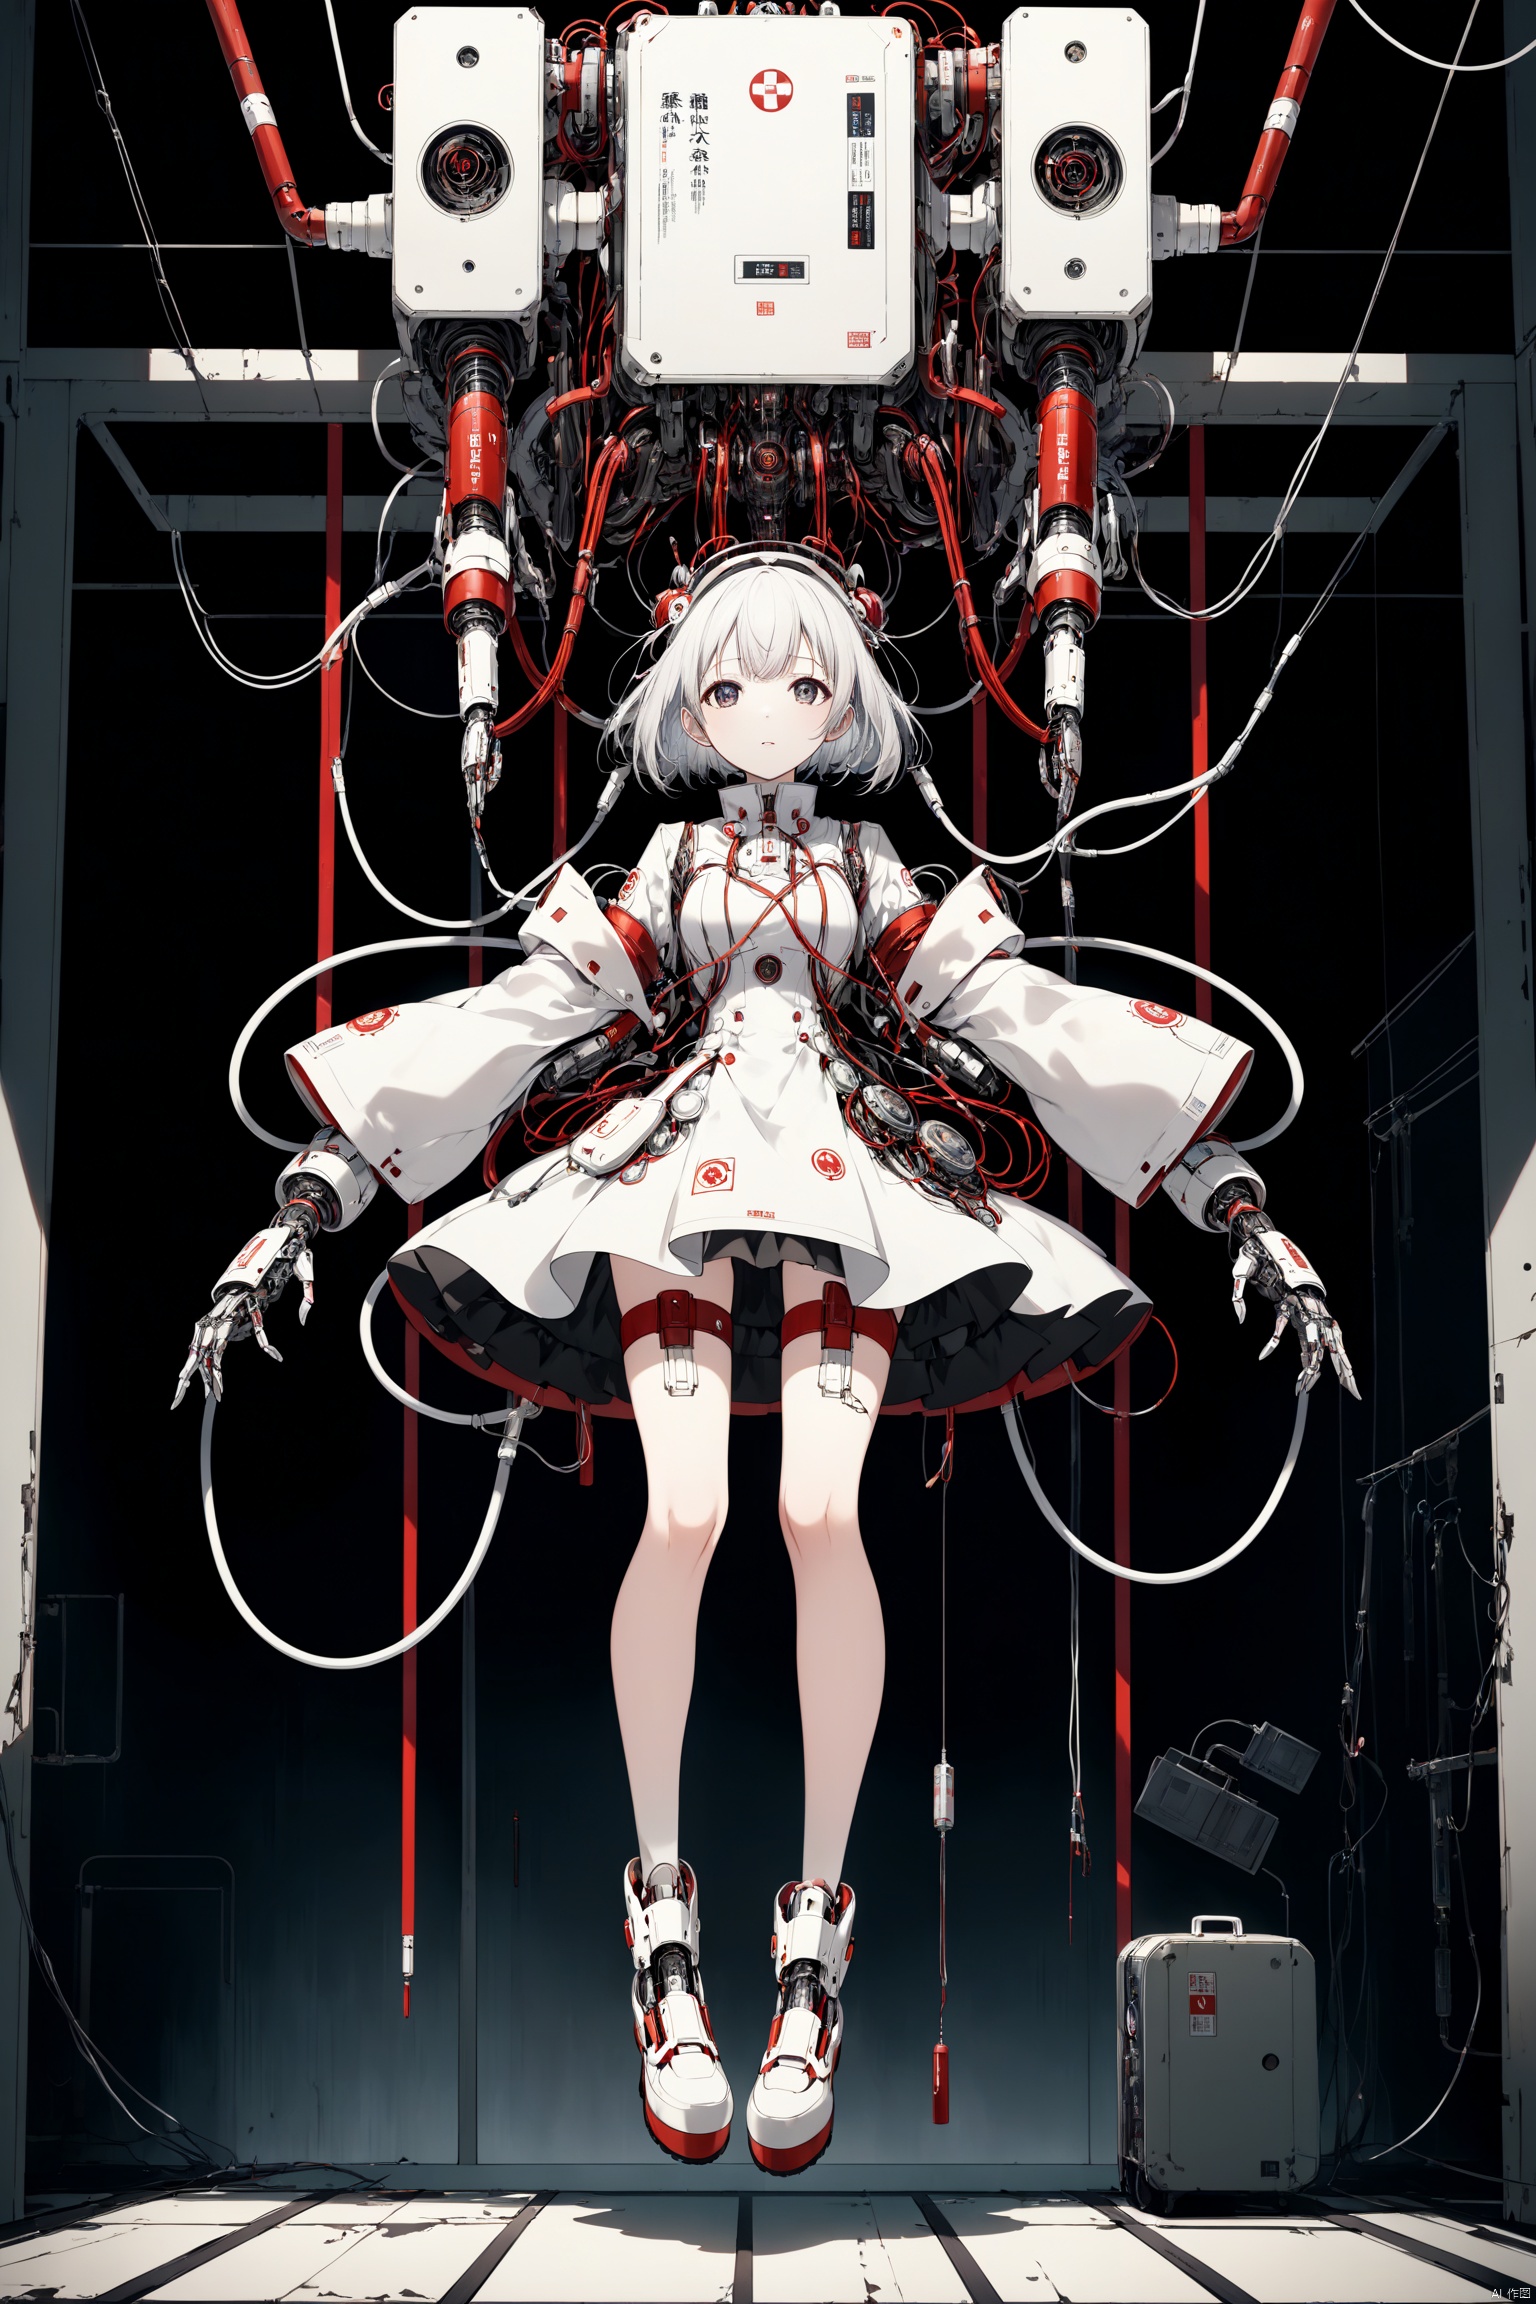  1 woman, robot cyborg
full body, hanging in the air
anime
broken maintenance
oriental
poetic
horror
ghost
tubes , wires
by
 Akihiko Yoshida
